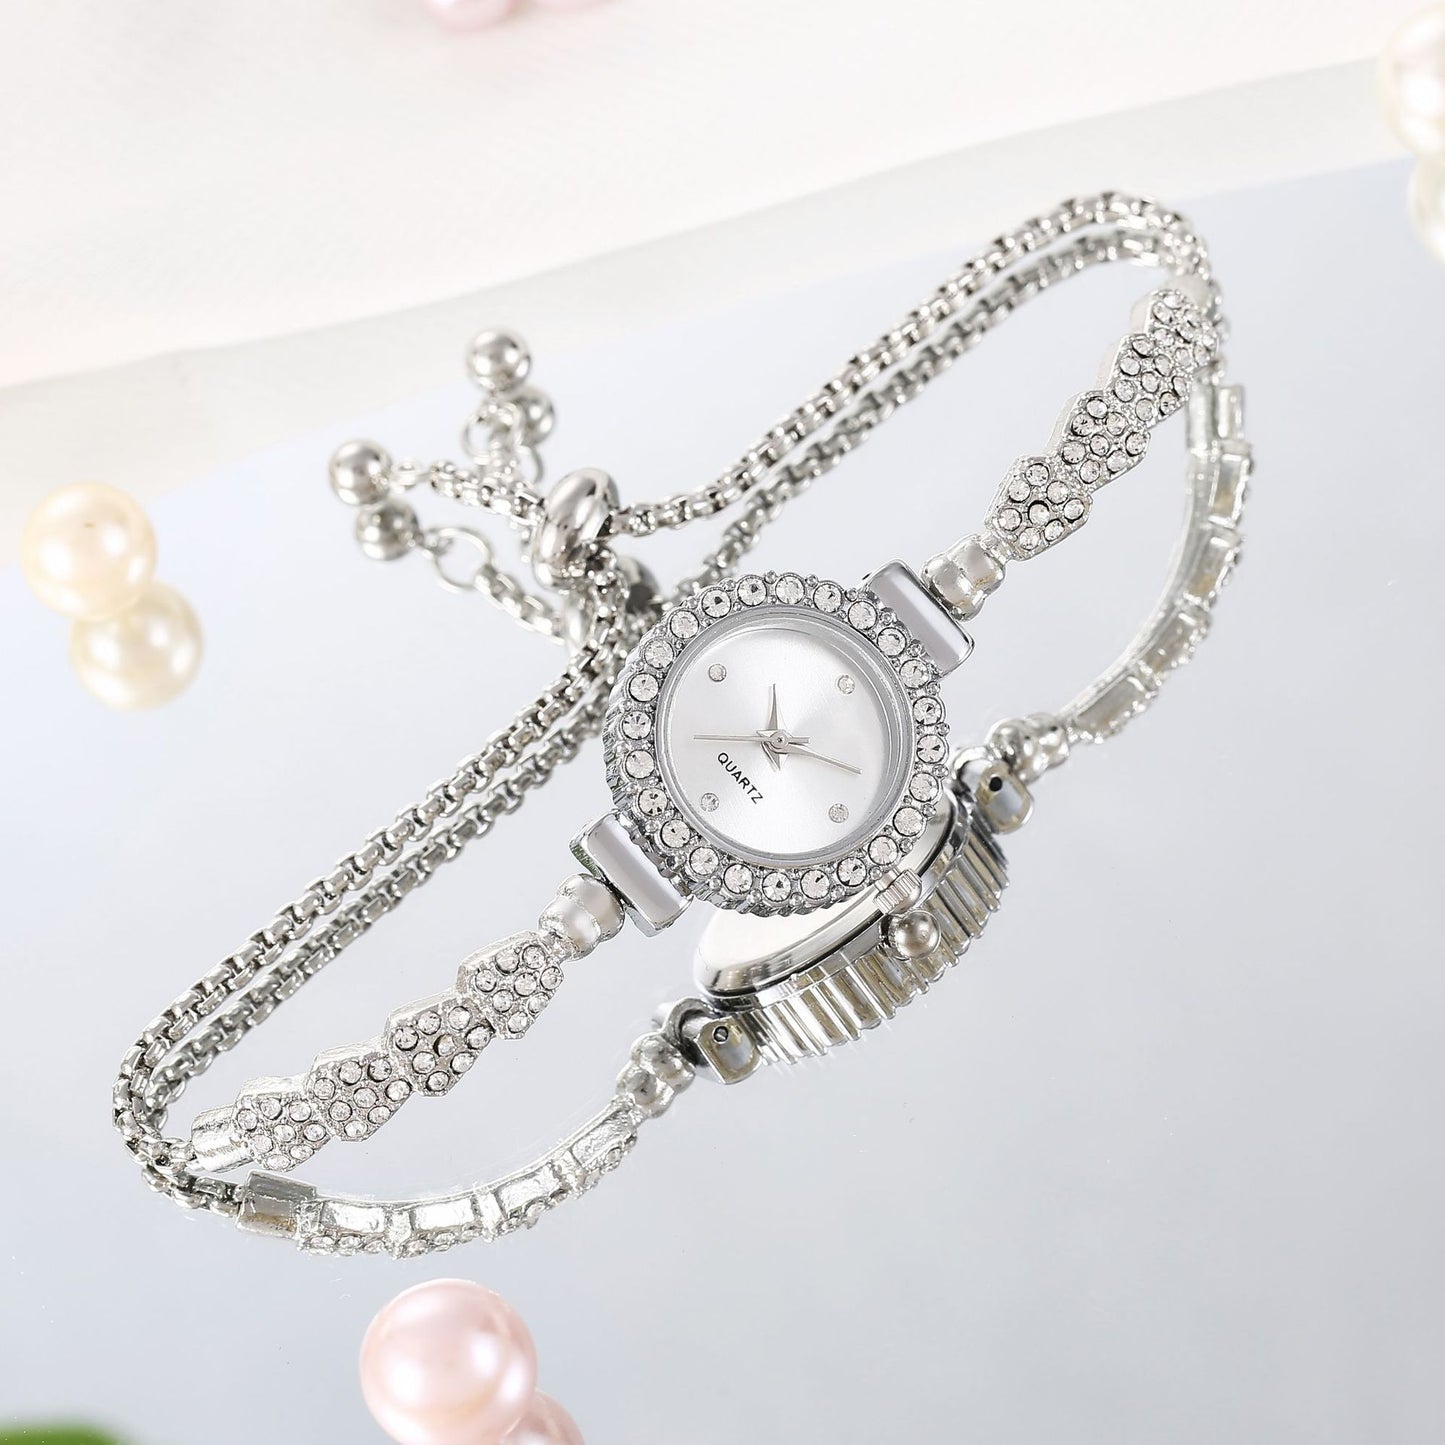 Adjustable wrist watch for women quartz watch